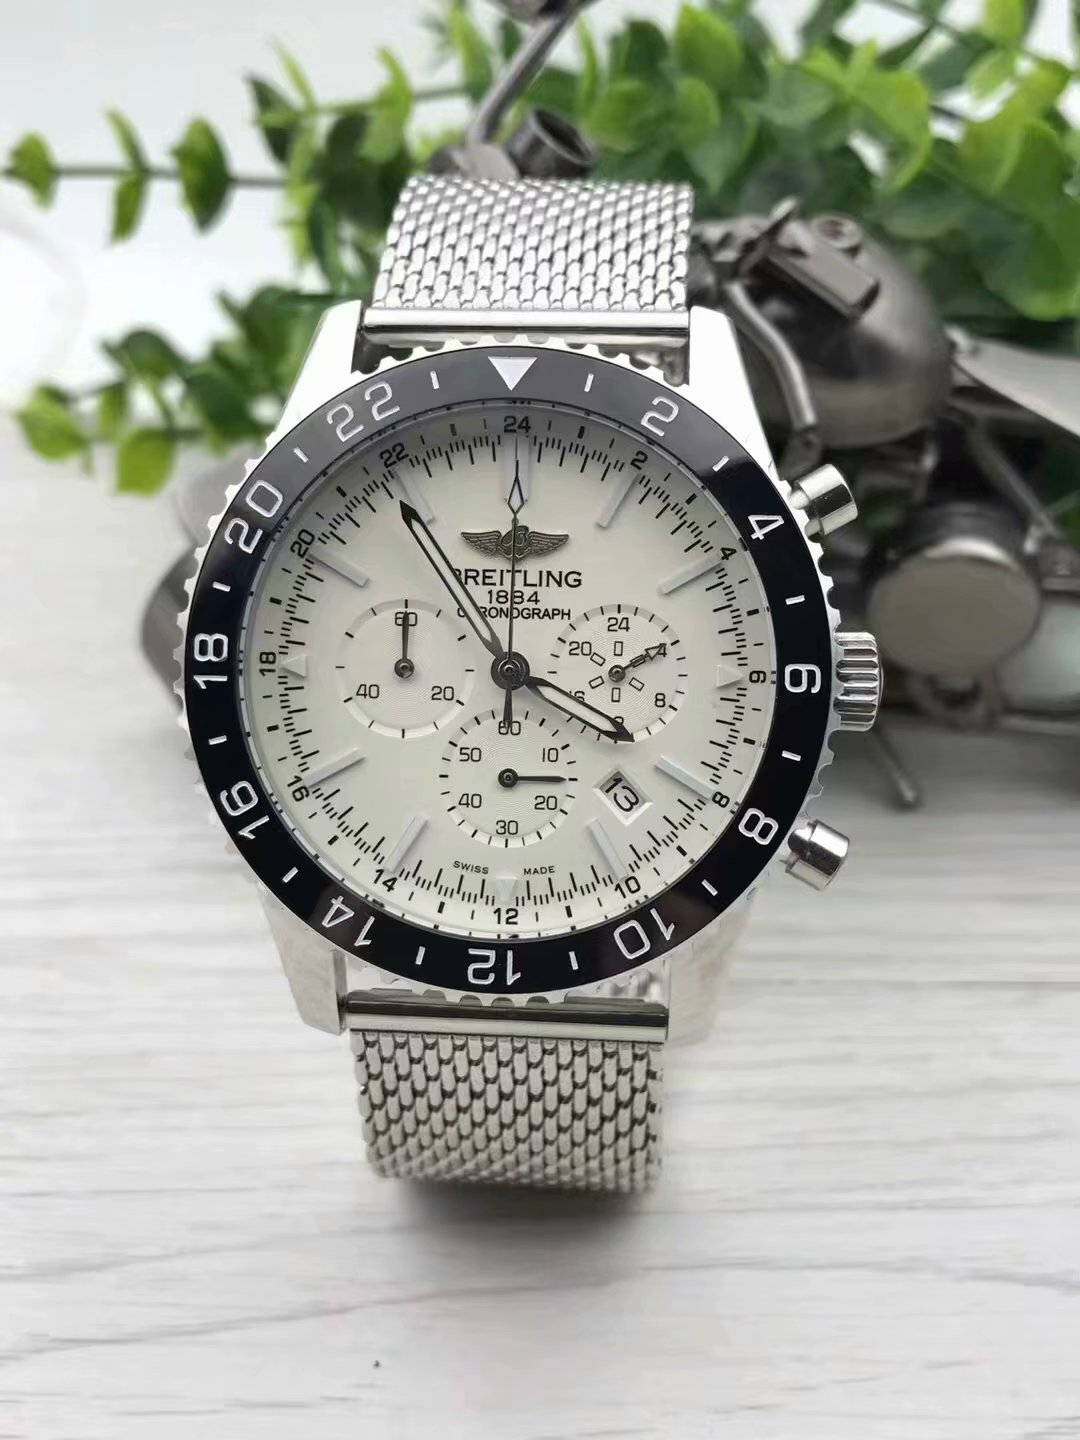 Breitling Watch 1019